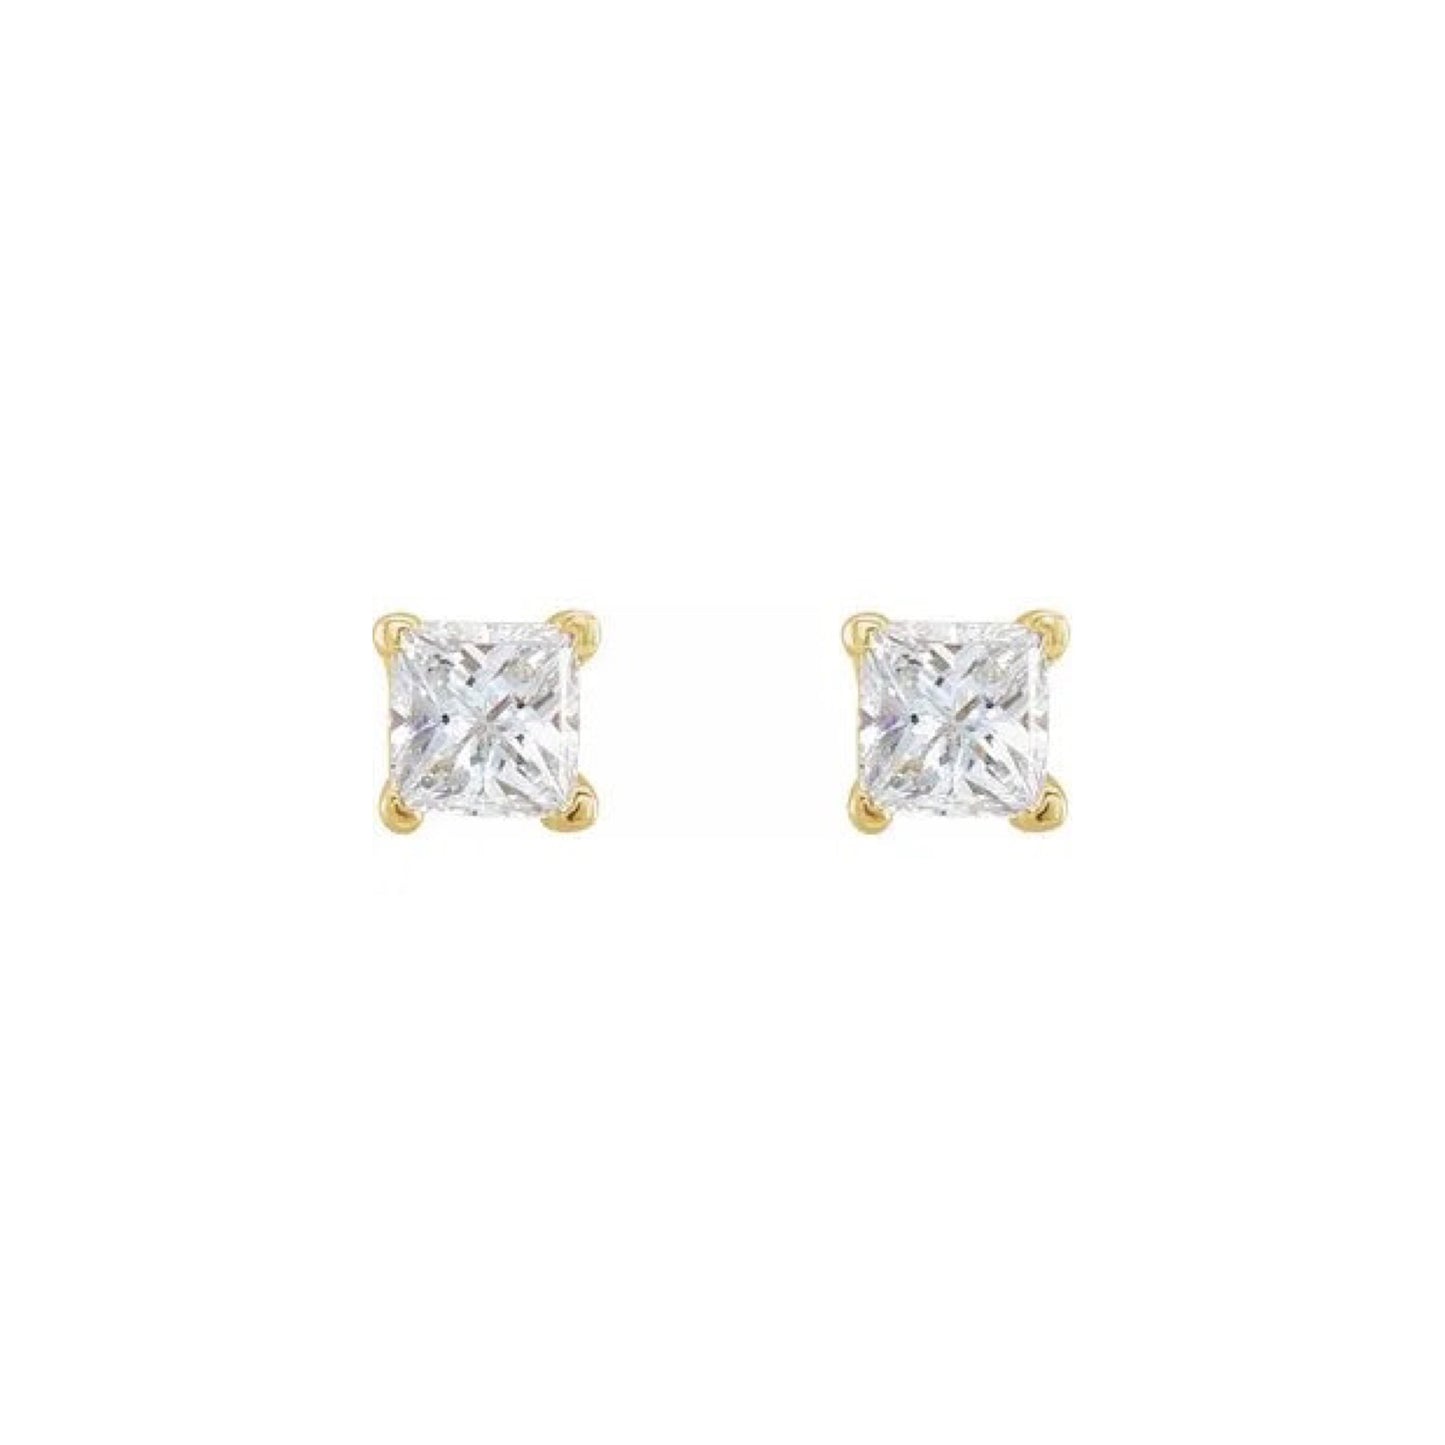 square prong stud earrings - natural diamond